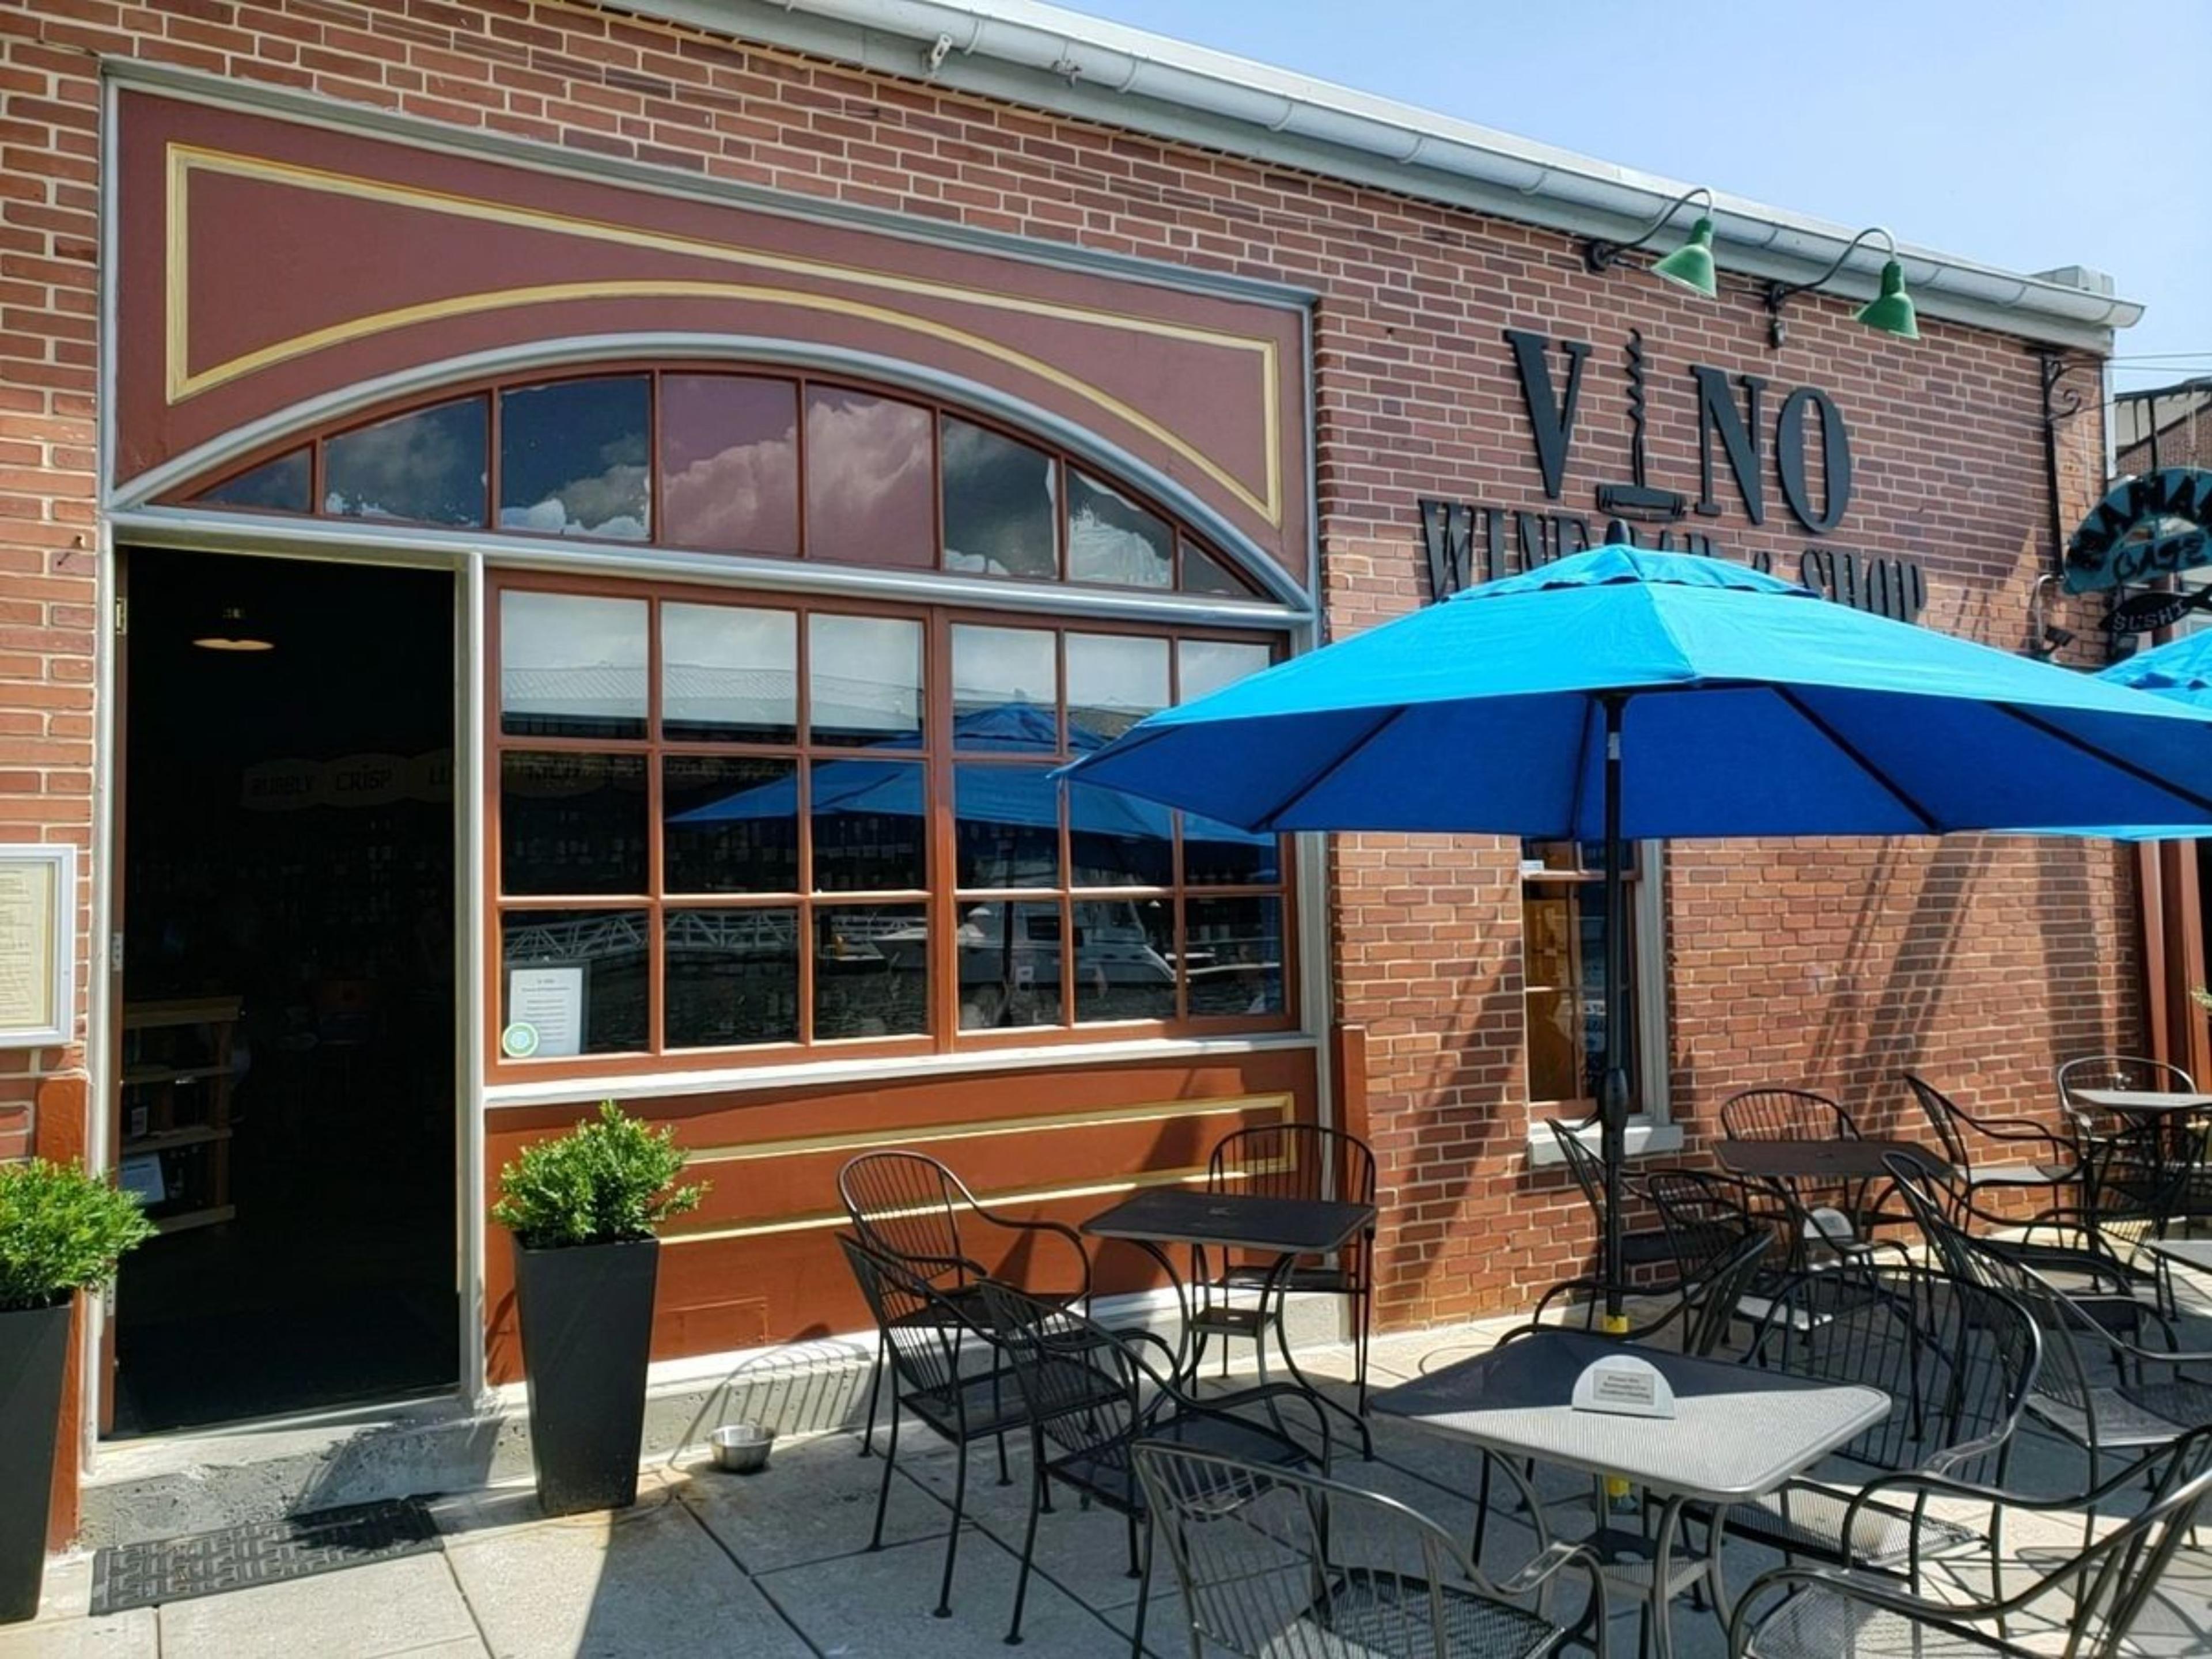 V-NO Wine Bar and Shop